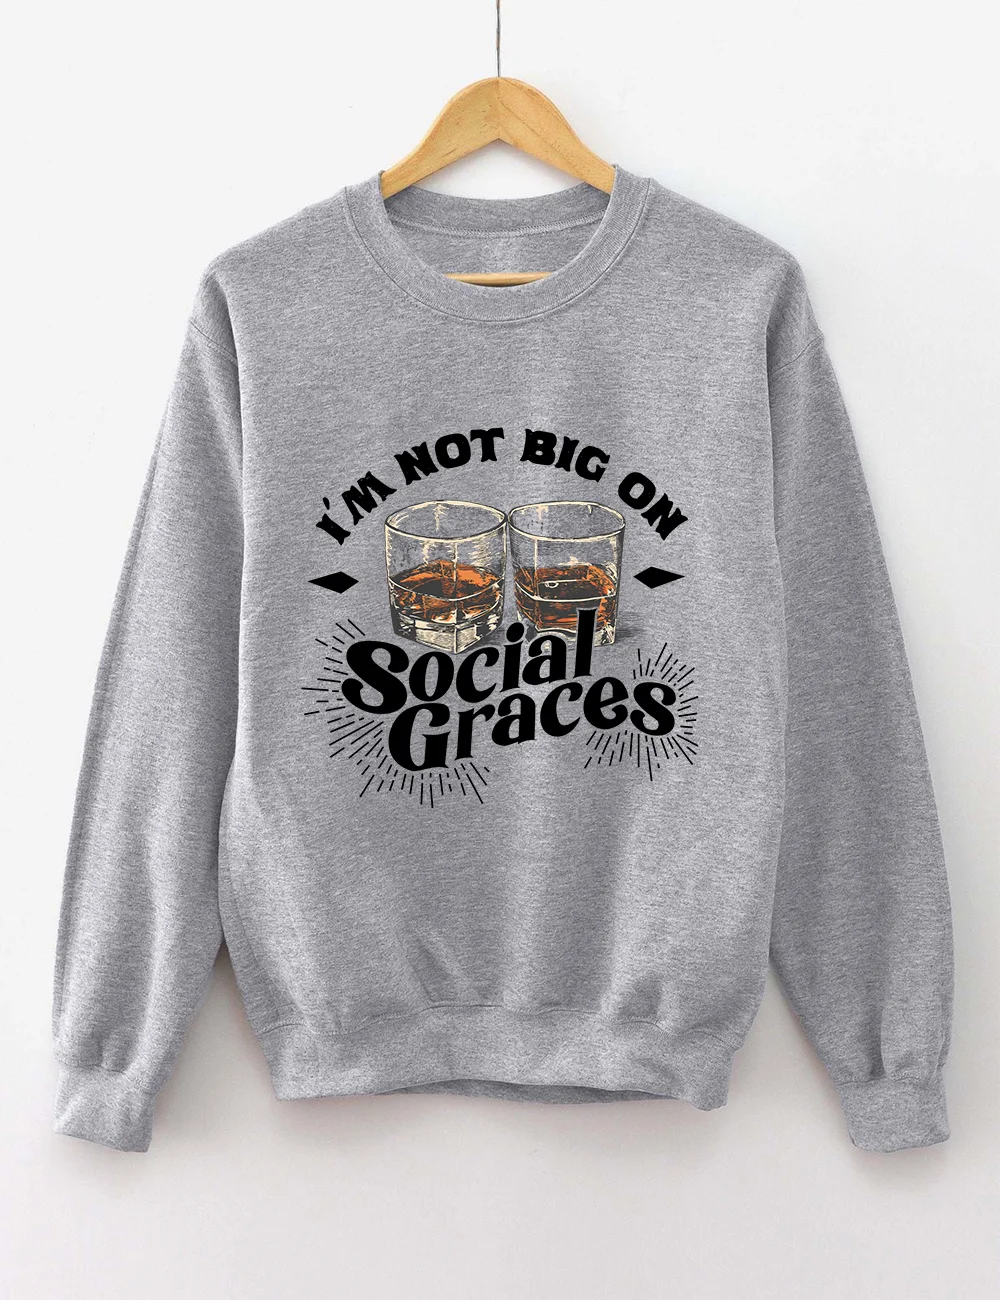 I'm Not Big on Social Graces Sweatshirt